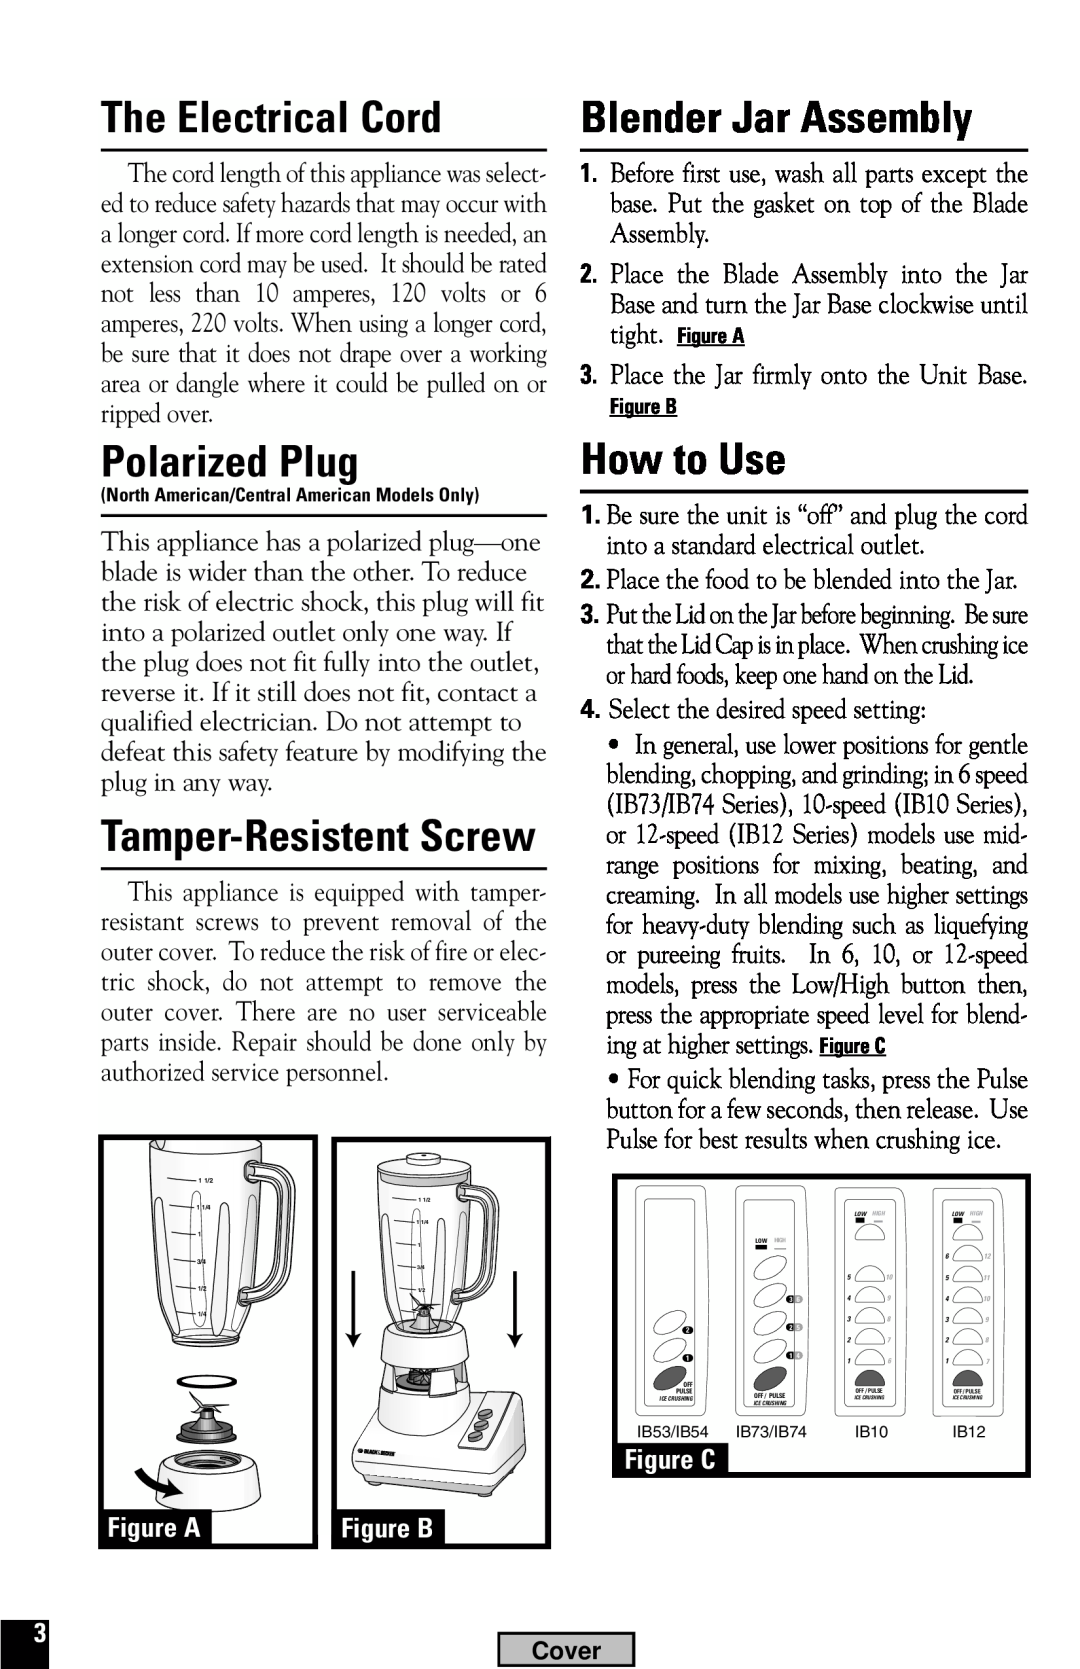 Black & Decker IB12 The Electrical Cord, Blender Jar Assembly, Polarized Plug, How to Use, Figure A, Figure B, Figure C 